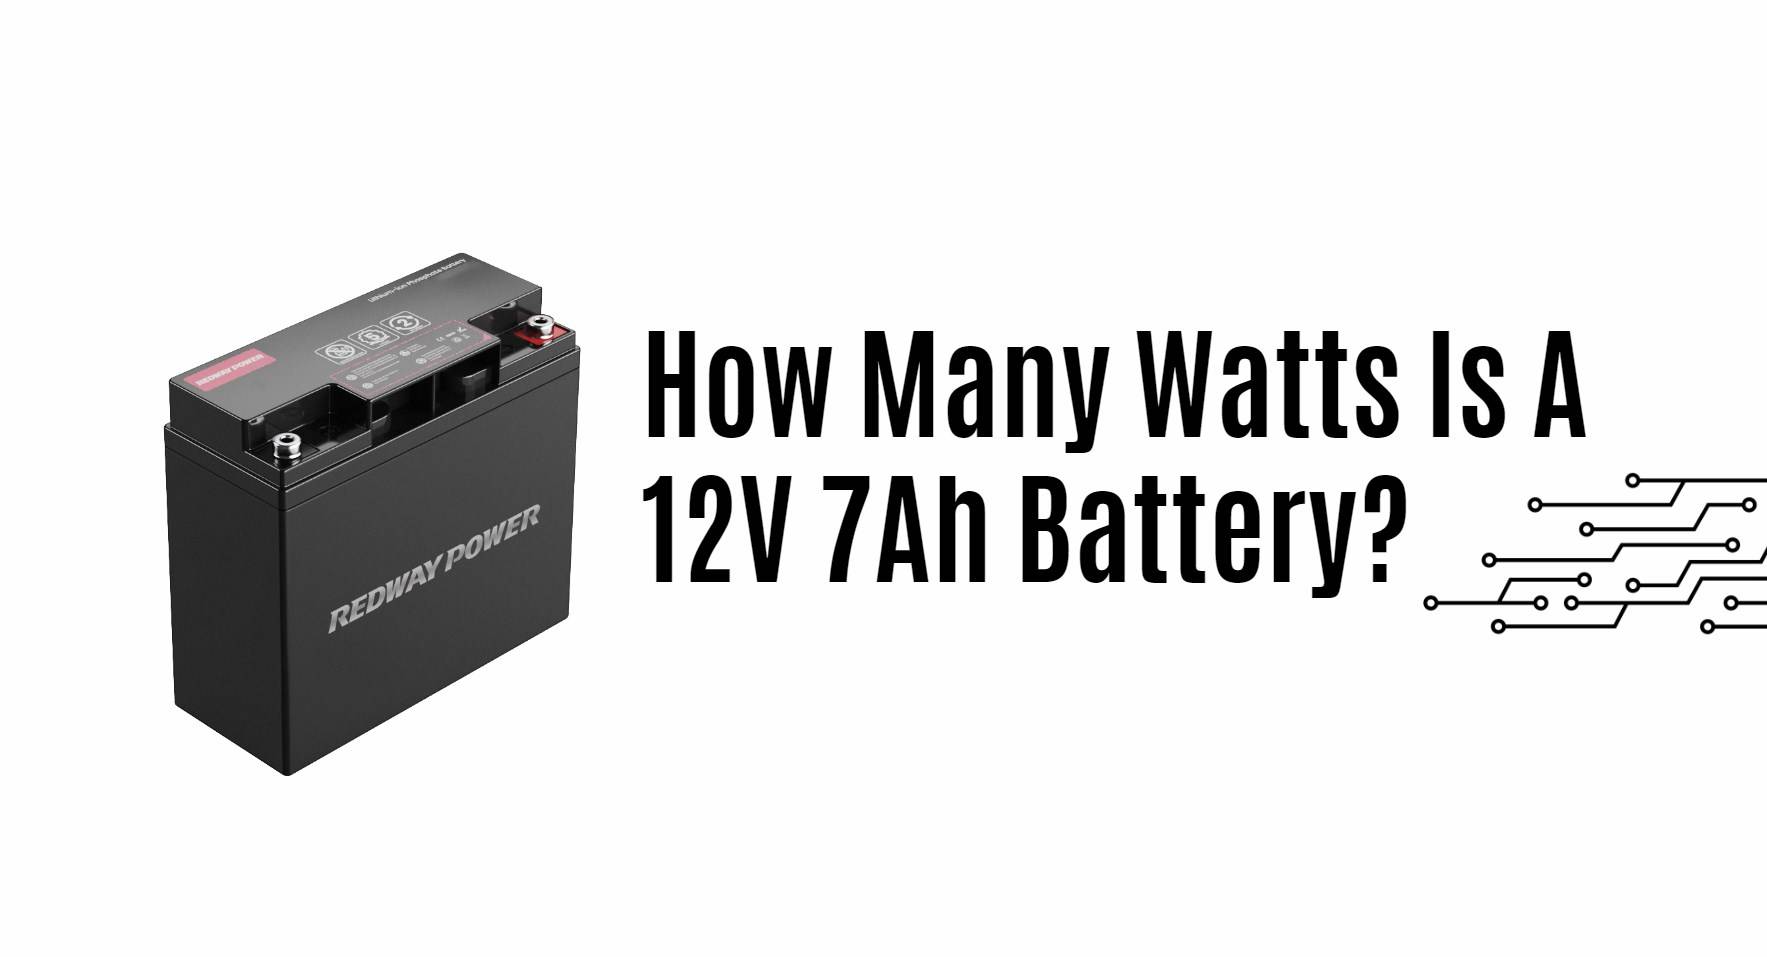 How Many Watts Is A 12v 7ah Battery?